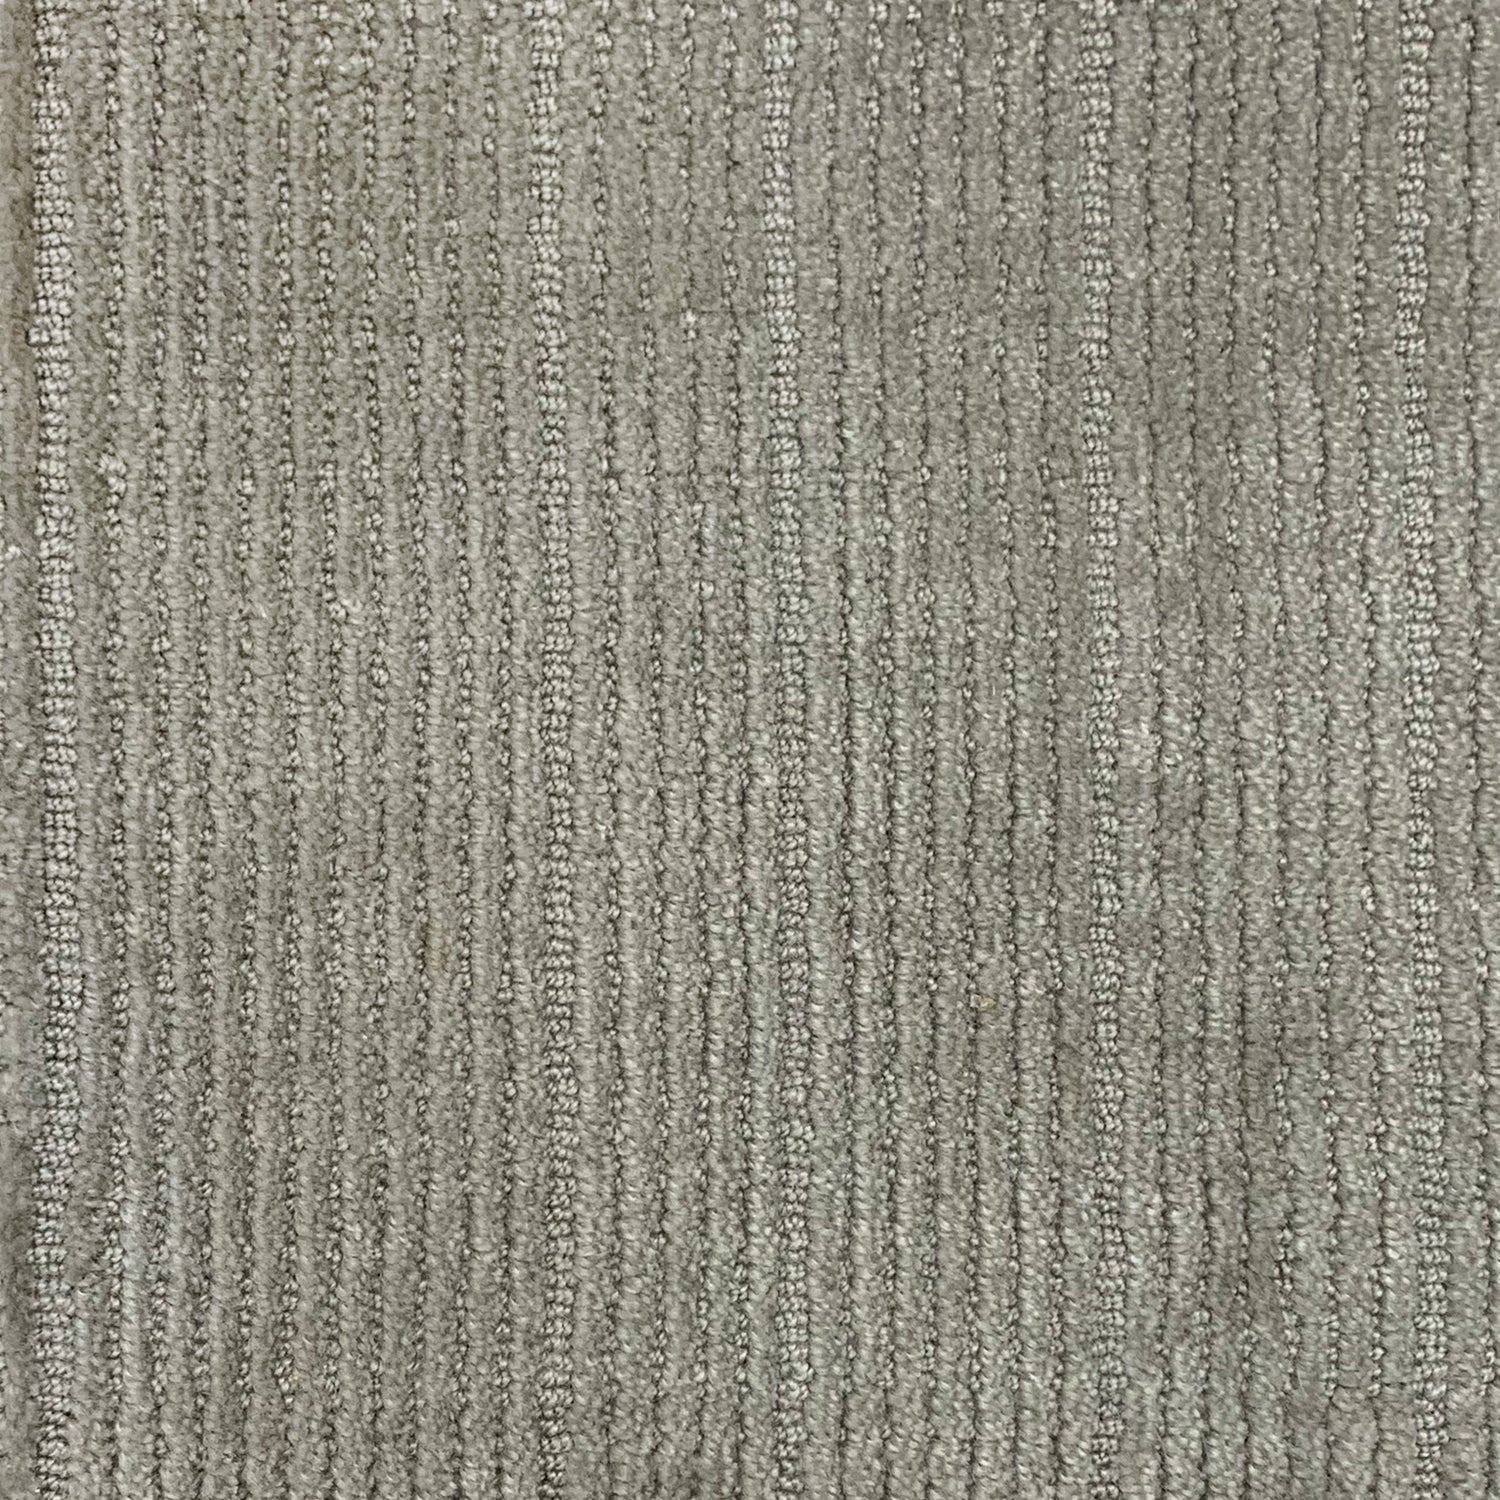 Nylon broadloom carpet swatch in a ribbed weave in silver.